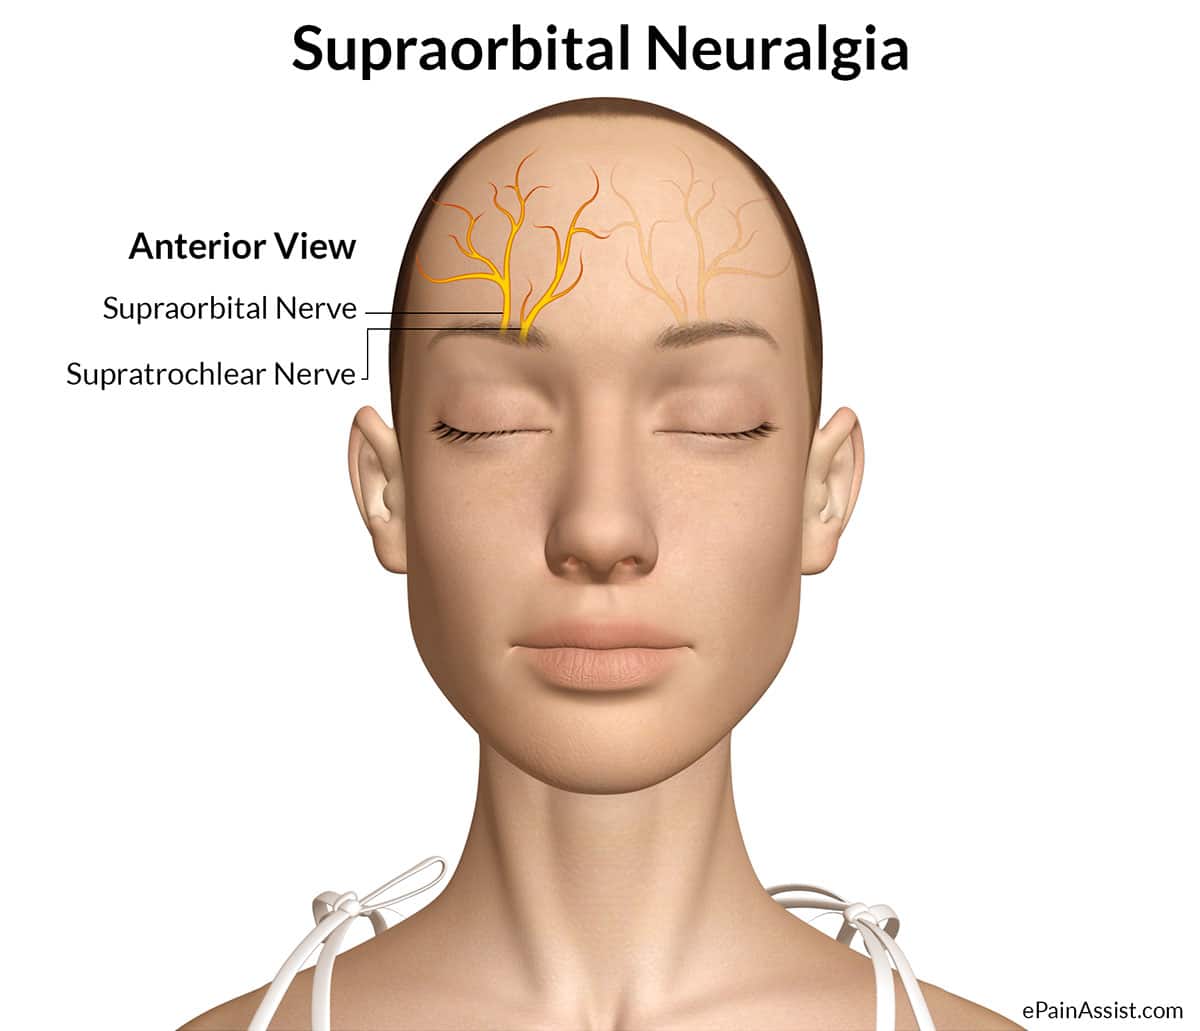 Supraorbital Neuralgia or Goggle Headache